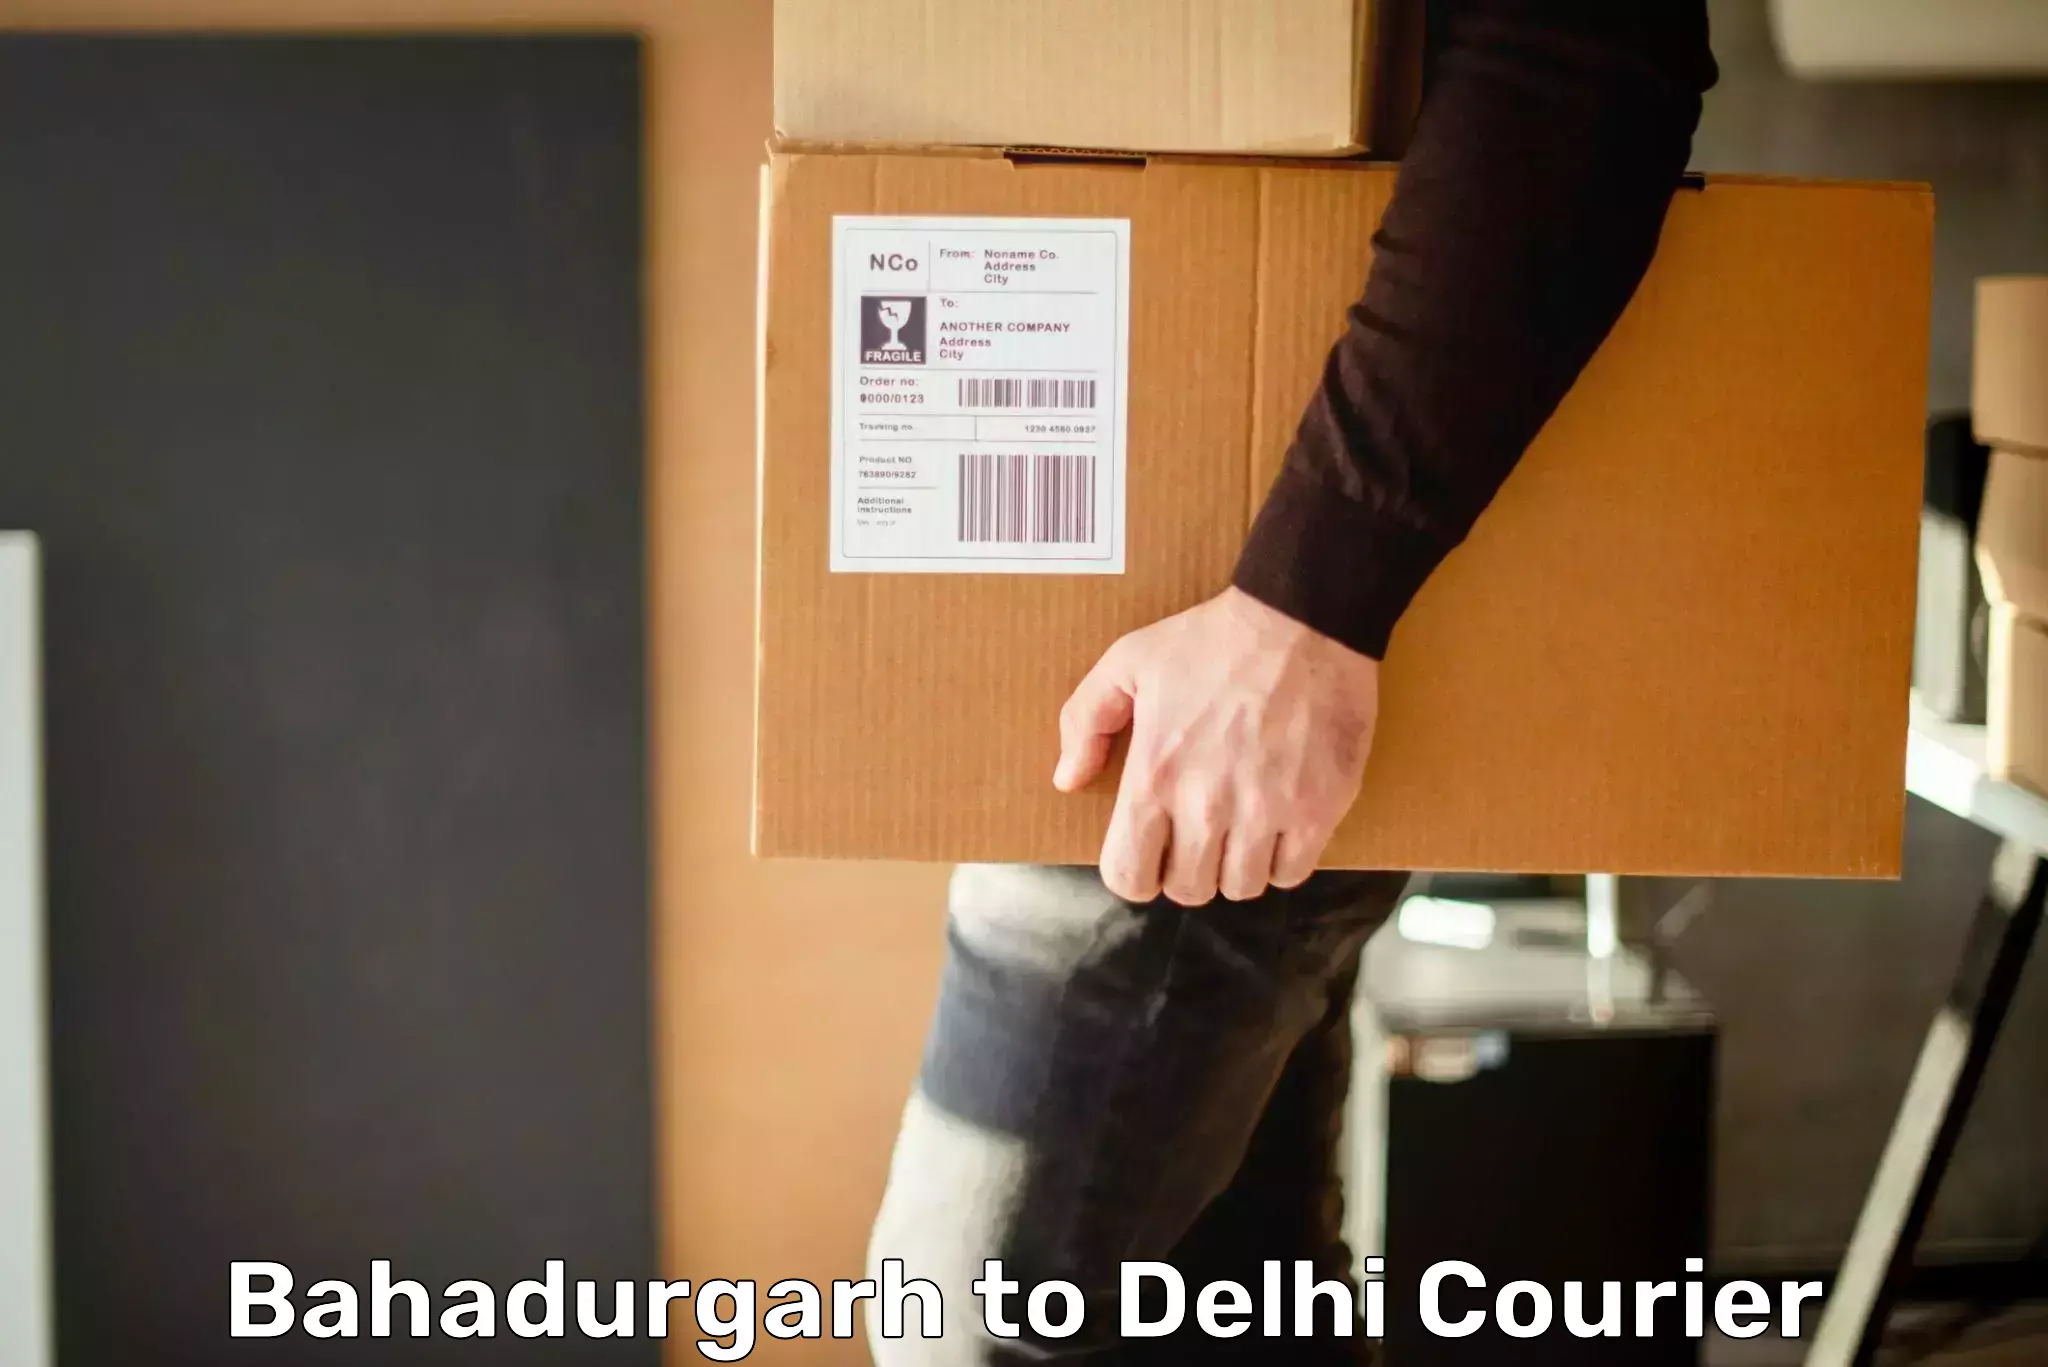 Global logistics network Bahadurgarh to Delhi